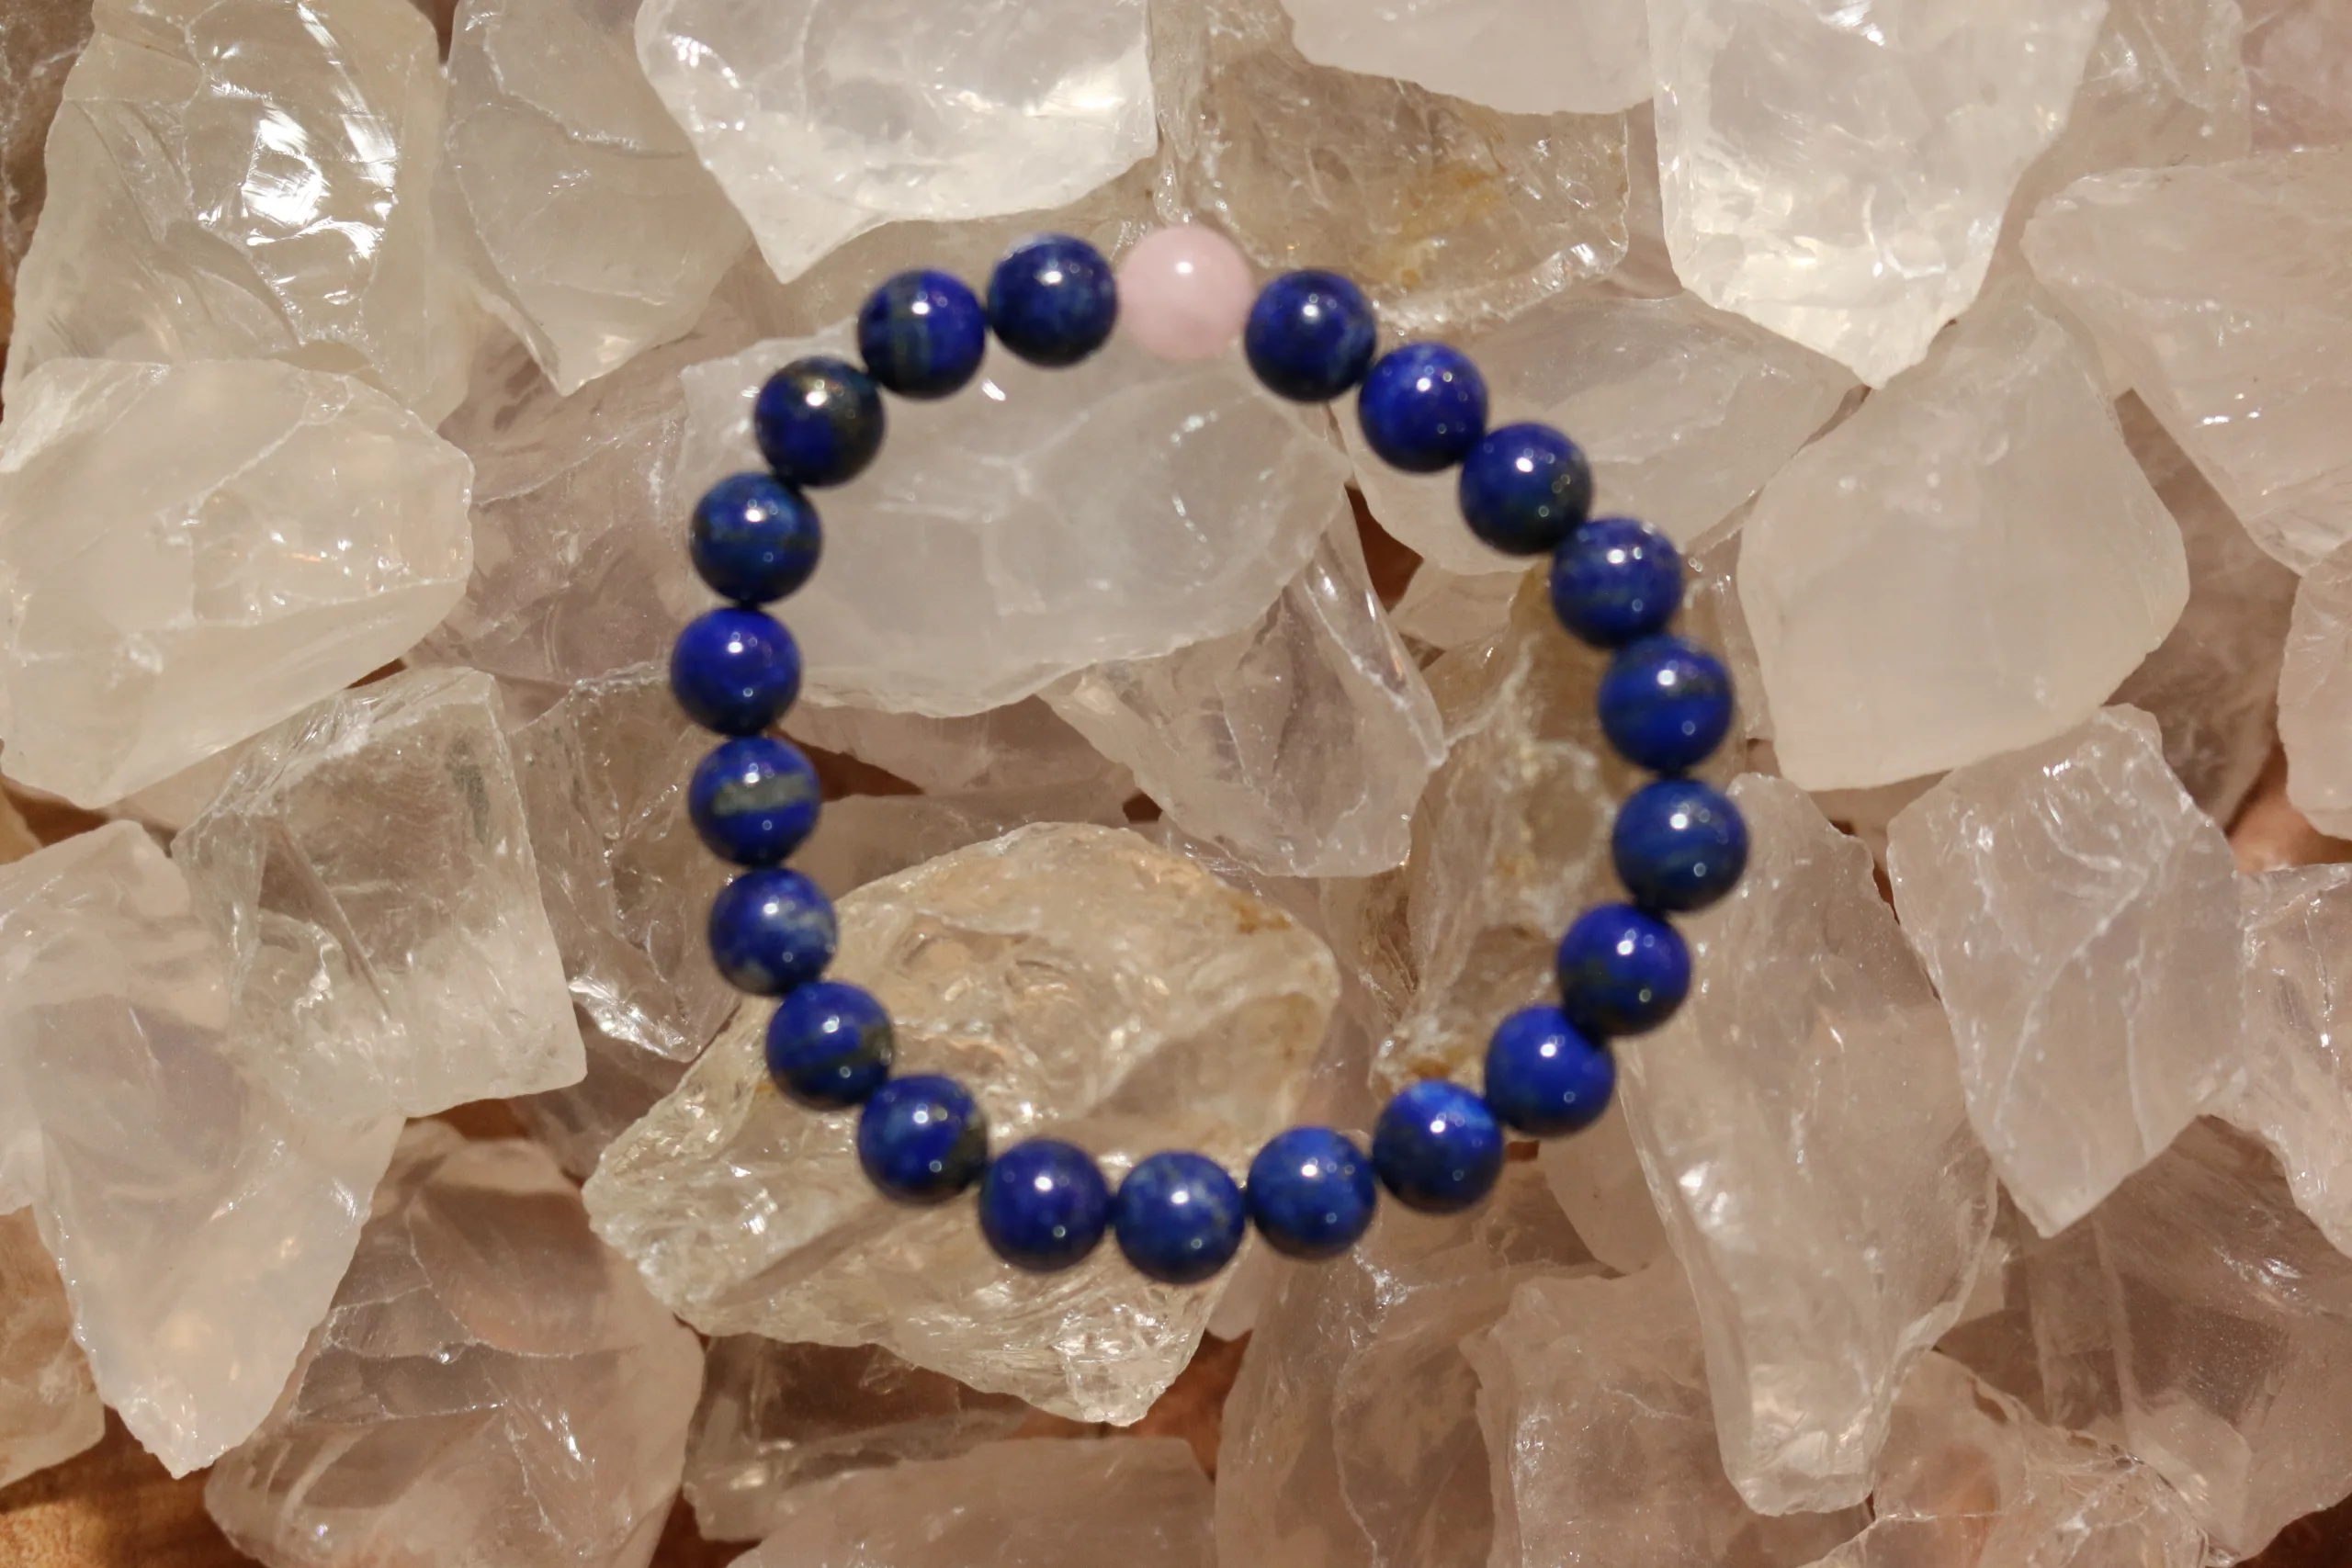 Lapis Lazuli bracelet, Afghanistan- Emotional Healing Prehistoric Online